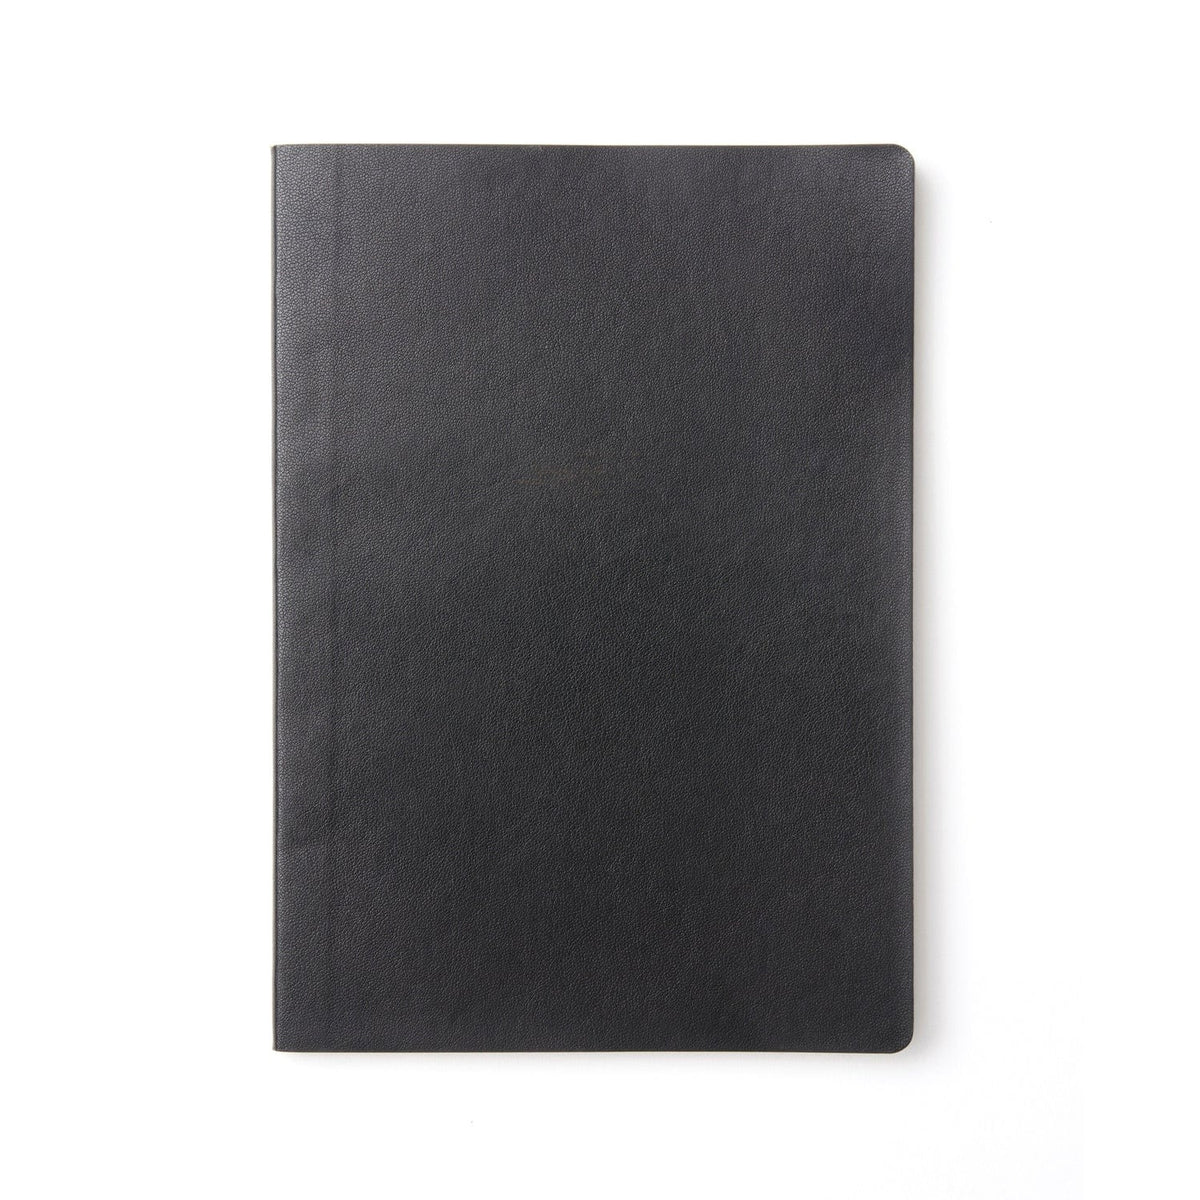 A5 Journal - Vegan Leather Black 59659 russell+hazel Journal